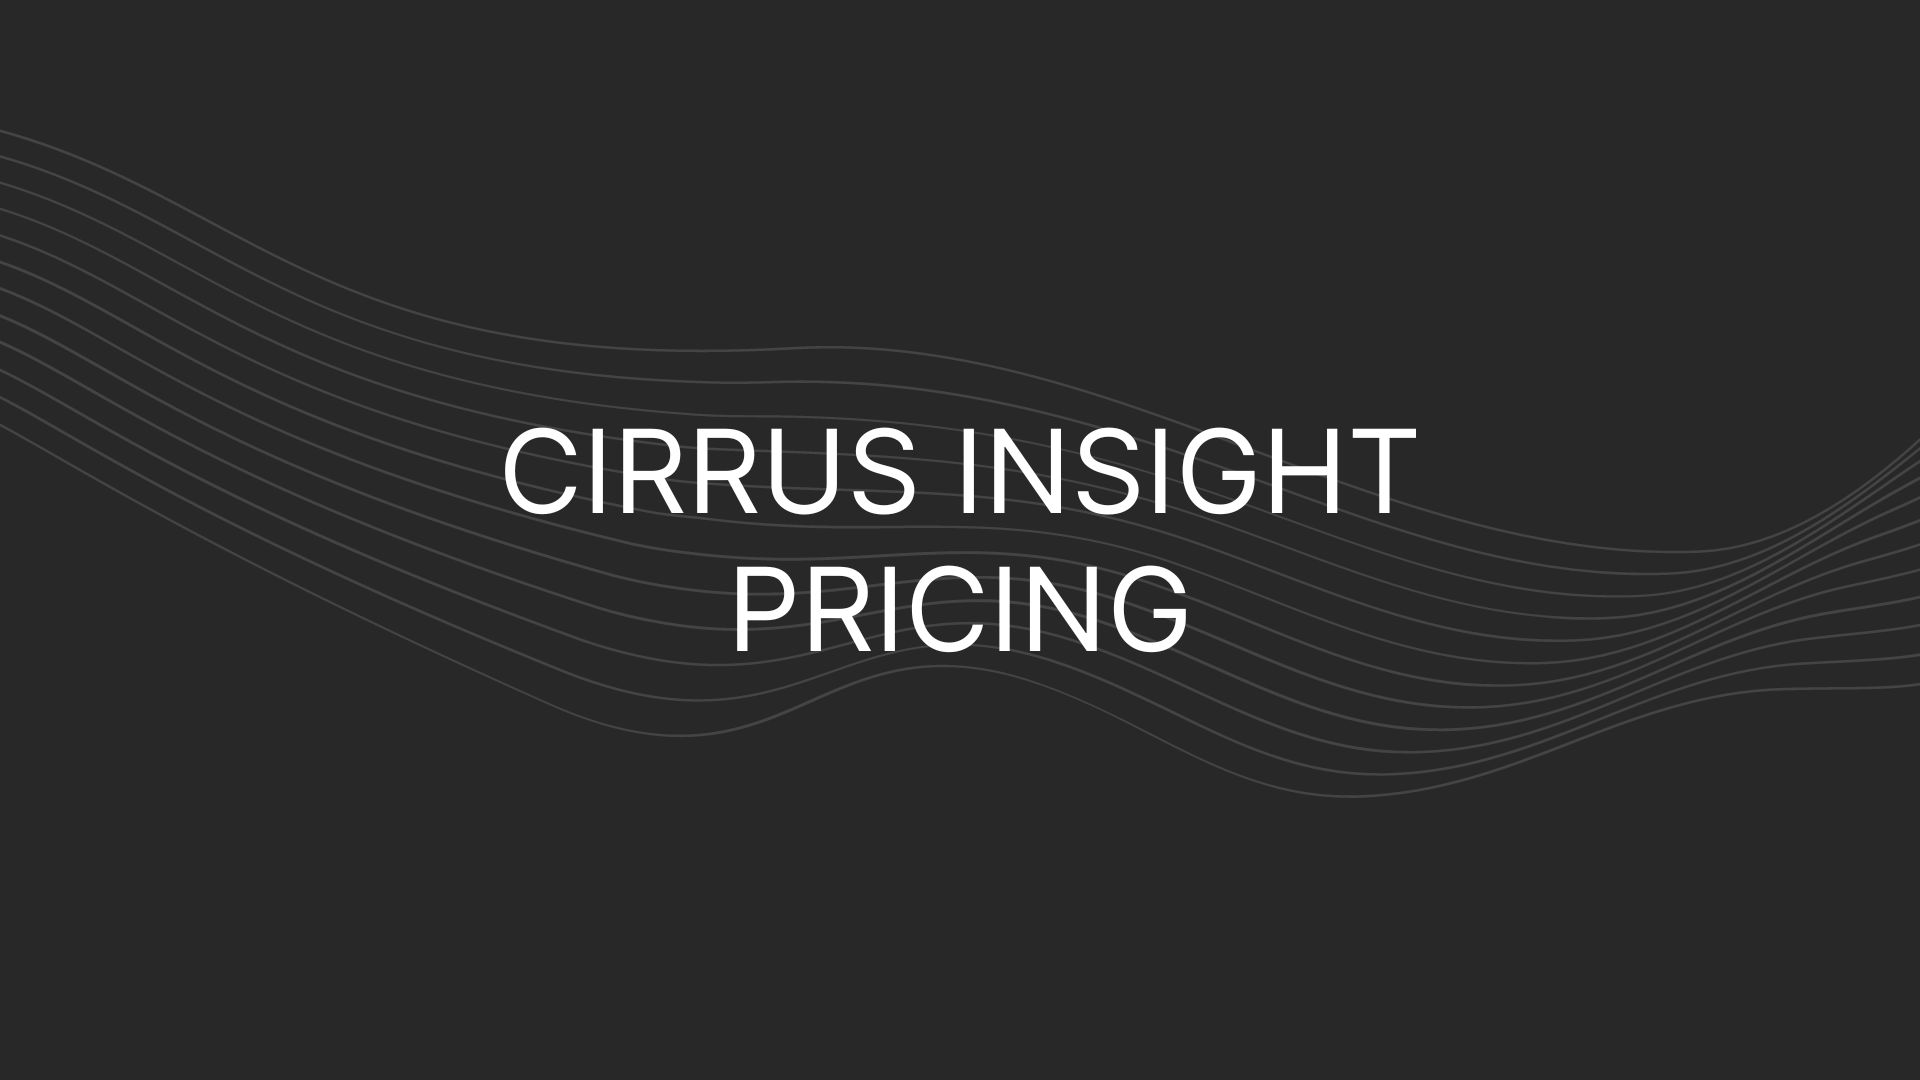 Cirrus Insight Pricing